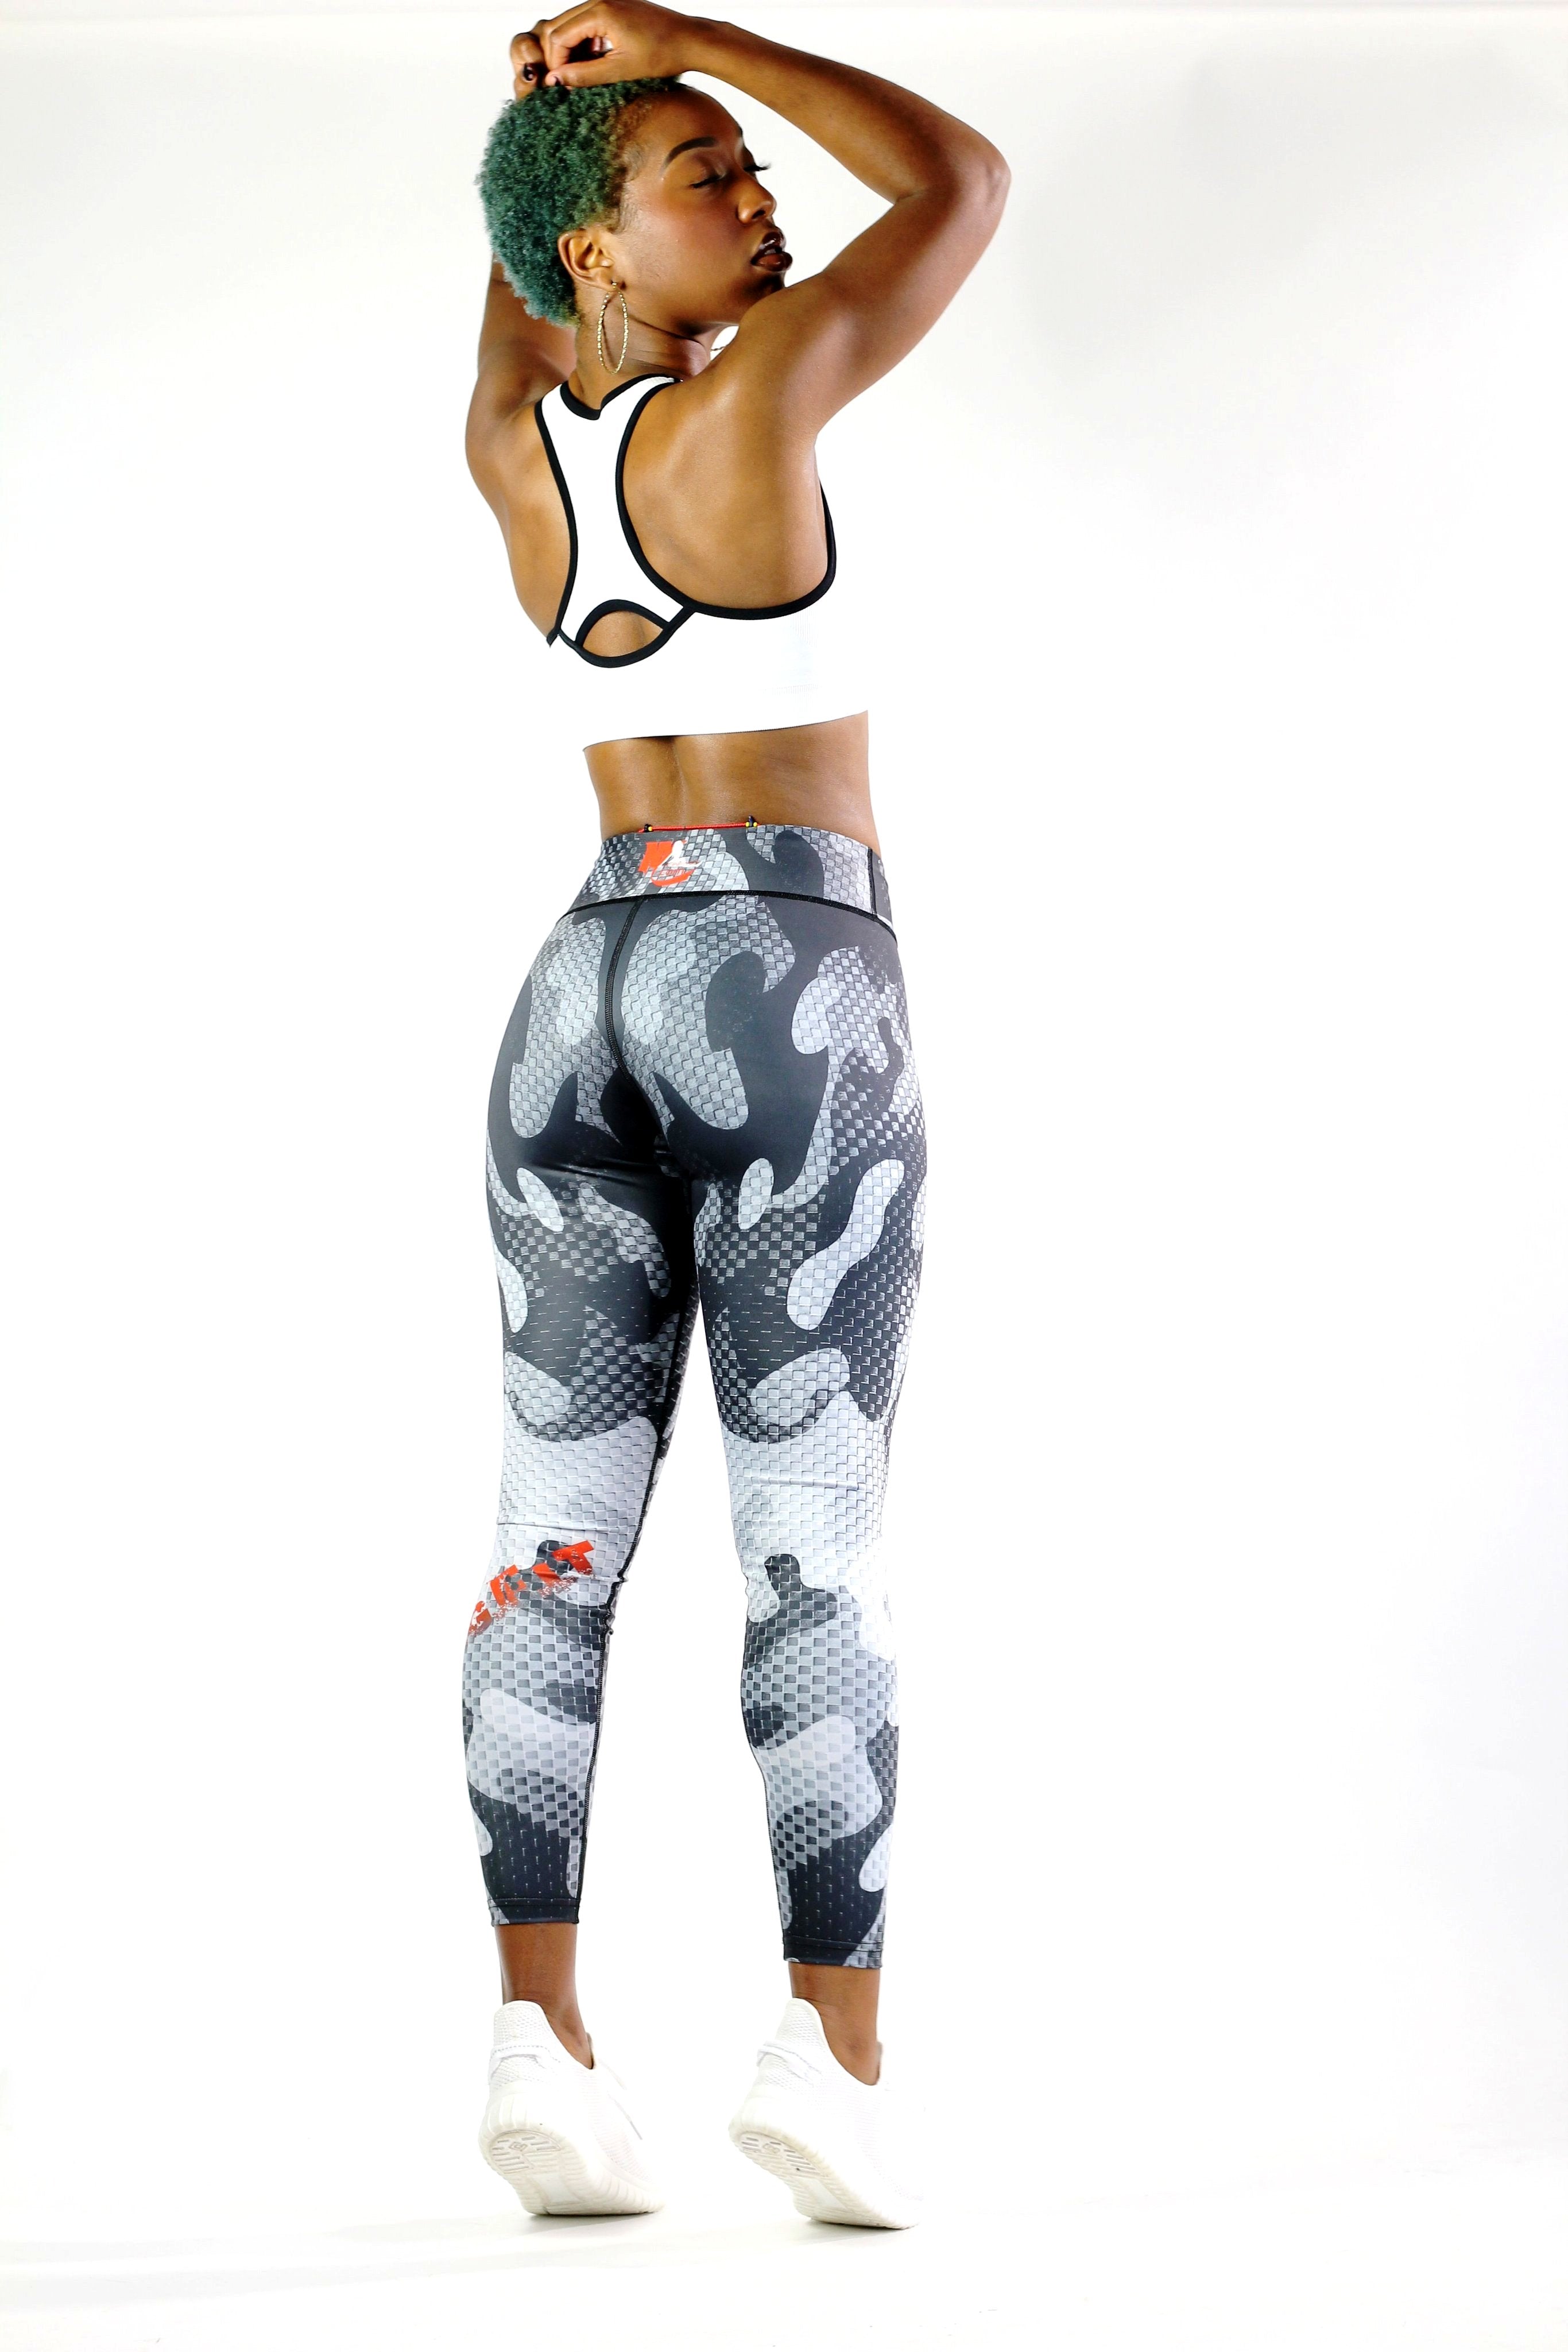 Pixcel Camo Yoga Pants | Camo Workout Leggings Online – NYLeggings.com